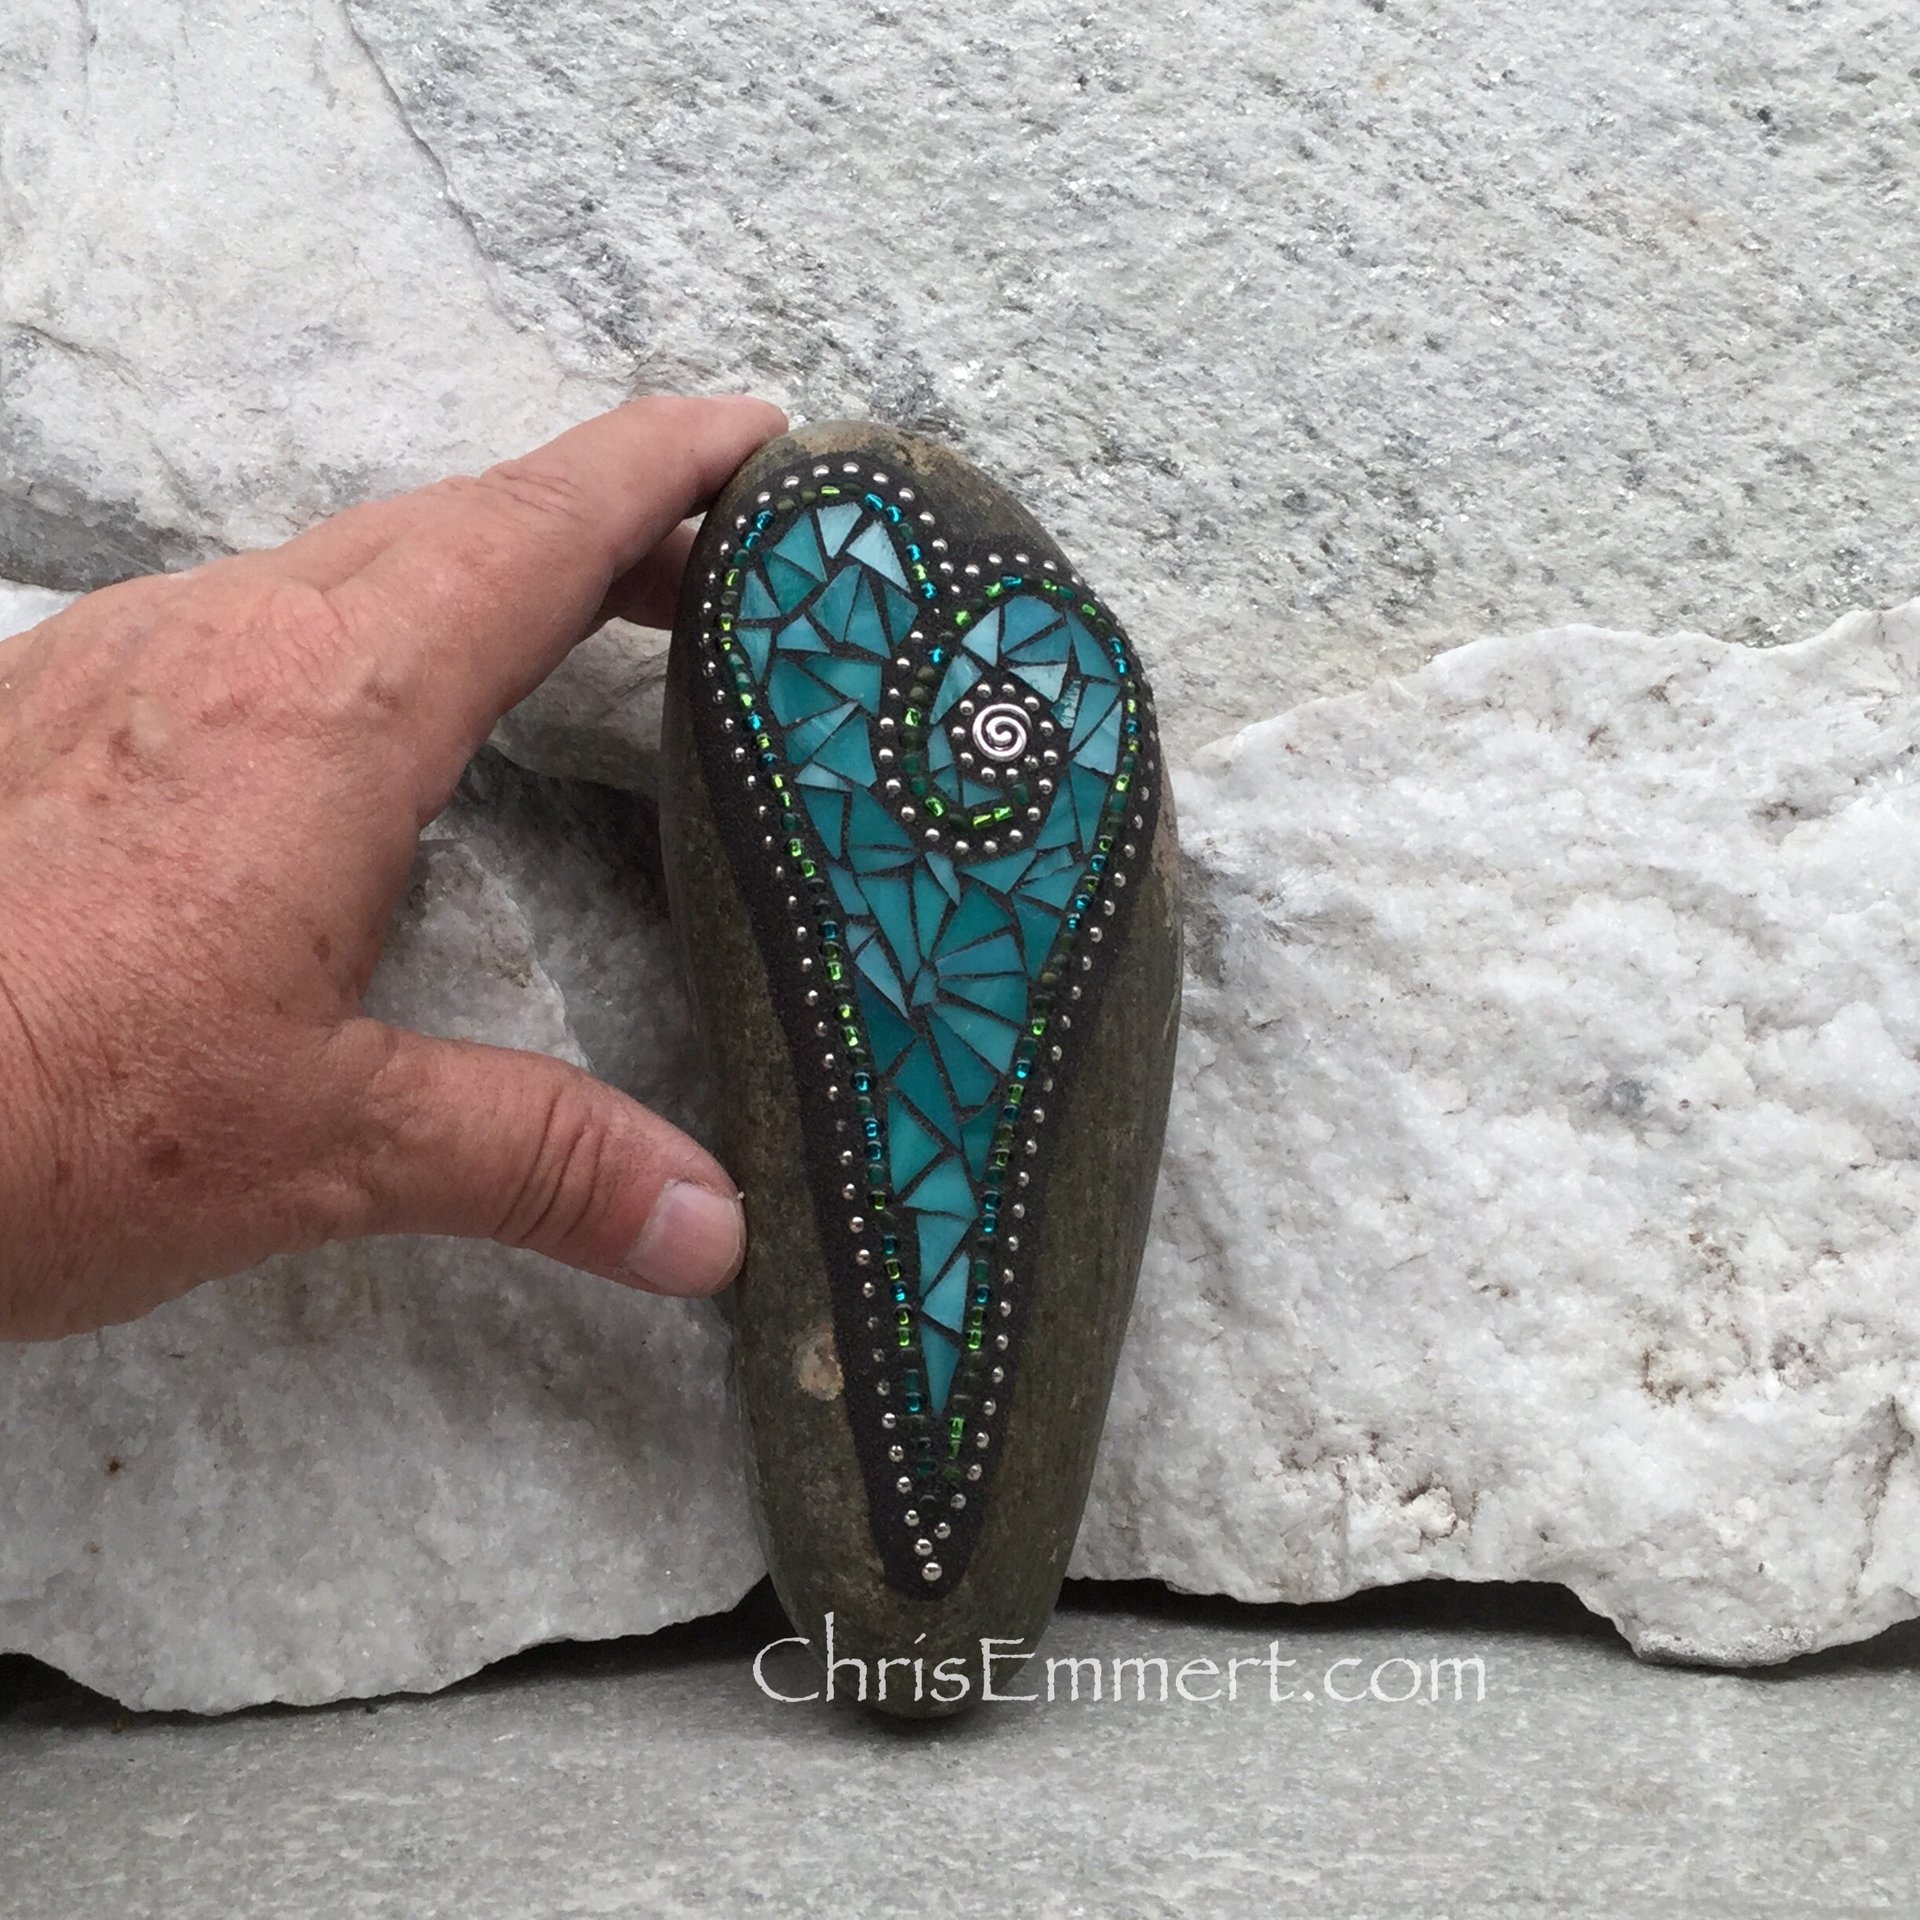 Teal Blue Mosaic Heart, Mosaic Rock, Mosaic Garden Stone, Home Decor, Gardening, Gardening Gift,